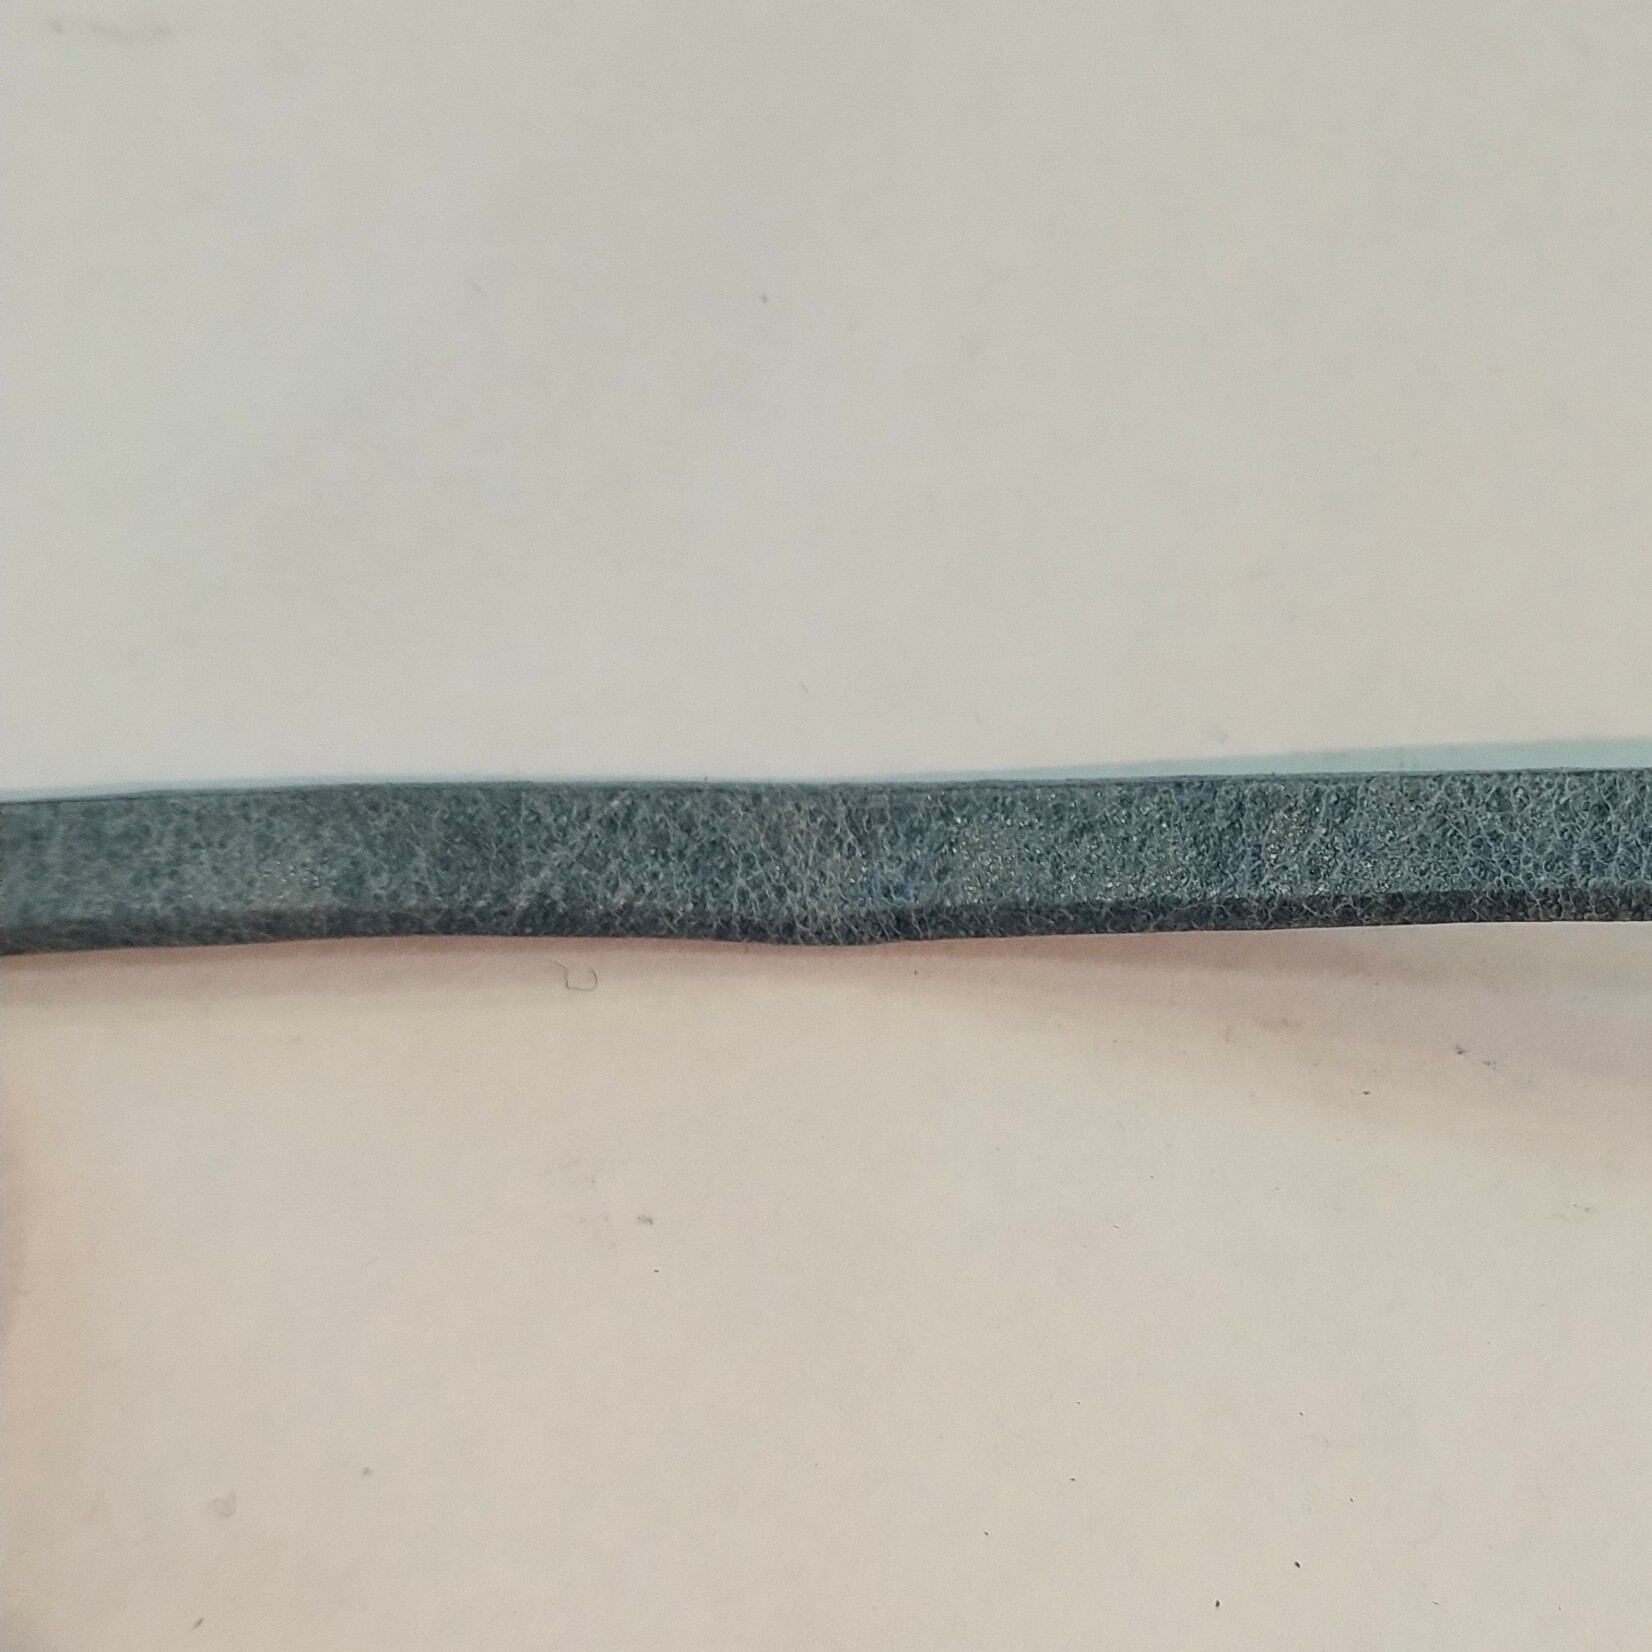 Leather Flat Strap Italian 5x2mm Blue - 1 Inch